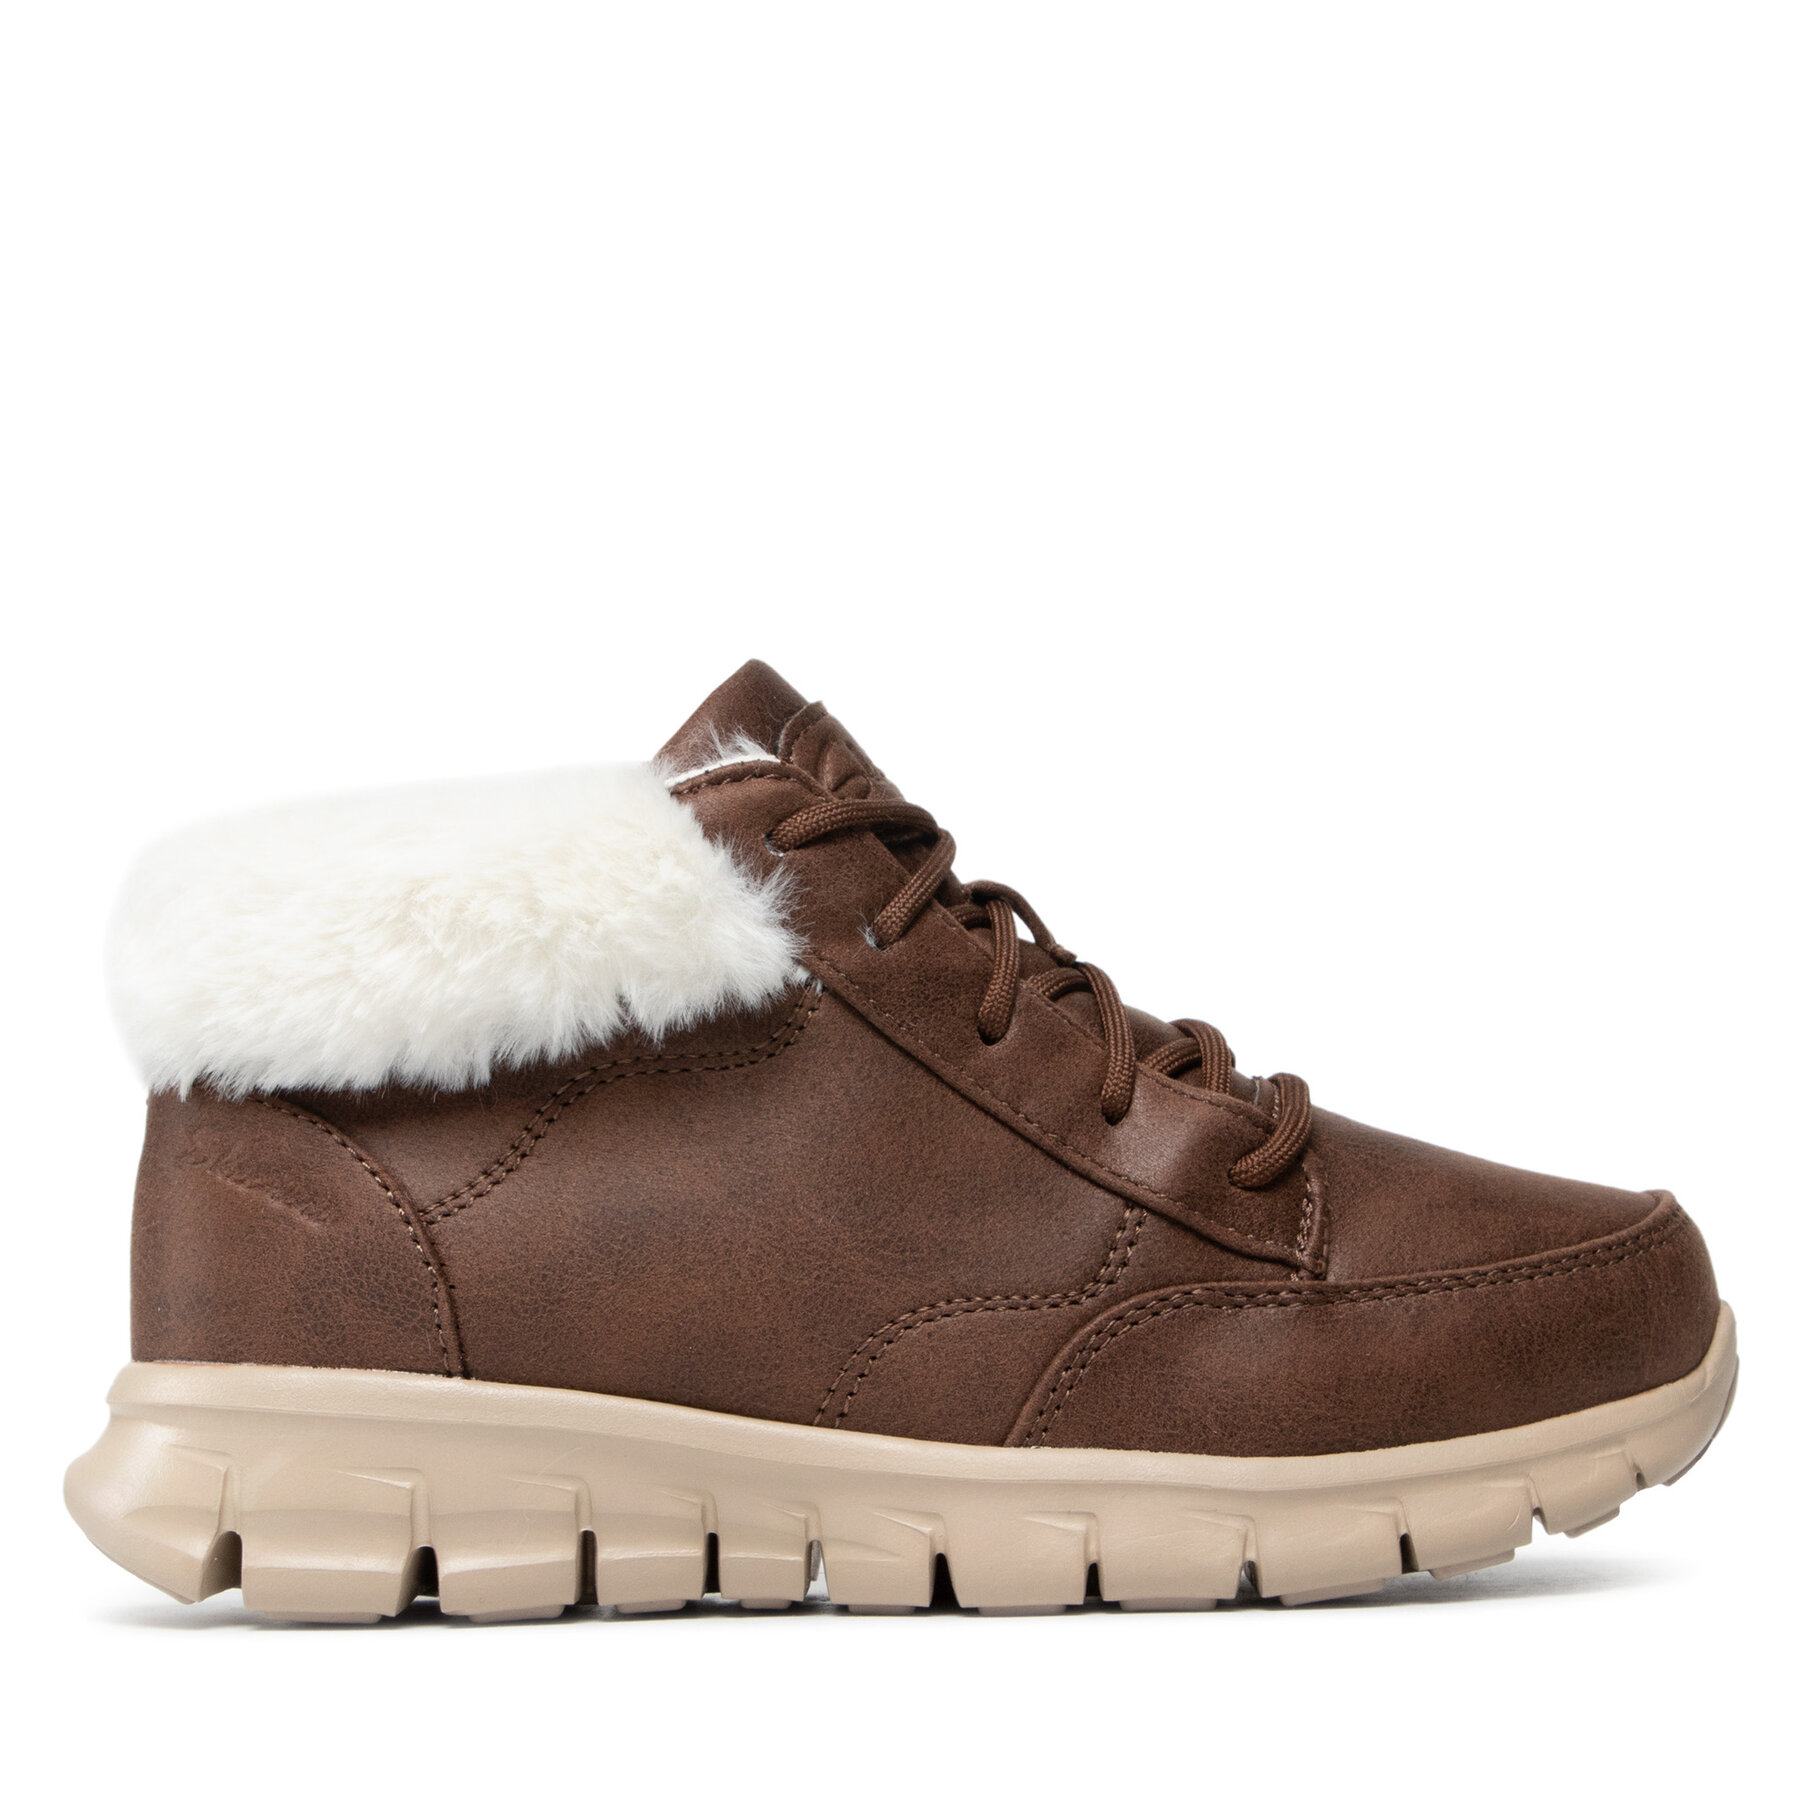 Skechers WARM SEEKER lined brown - Zapatos de invierno